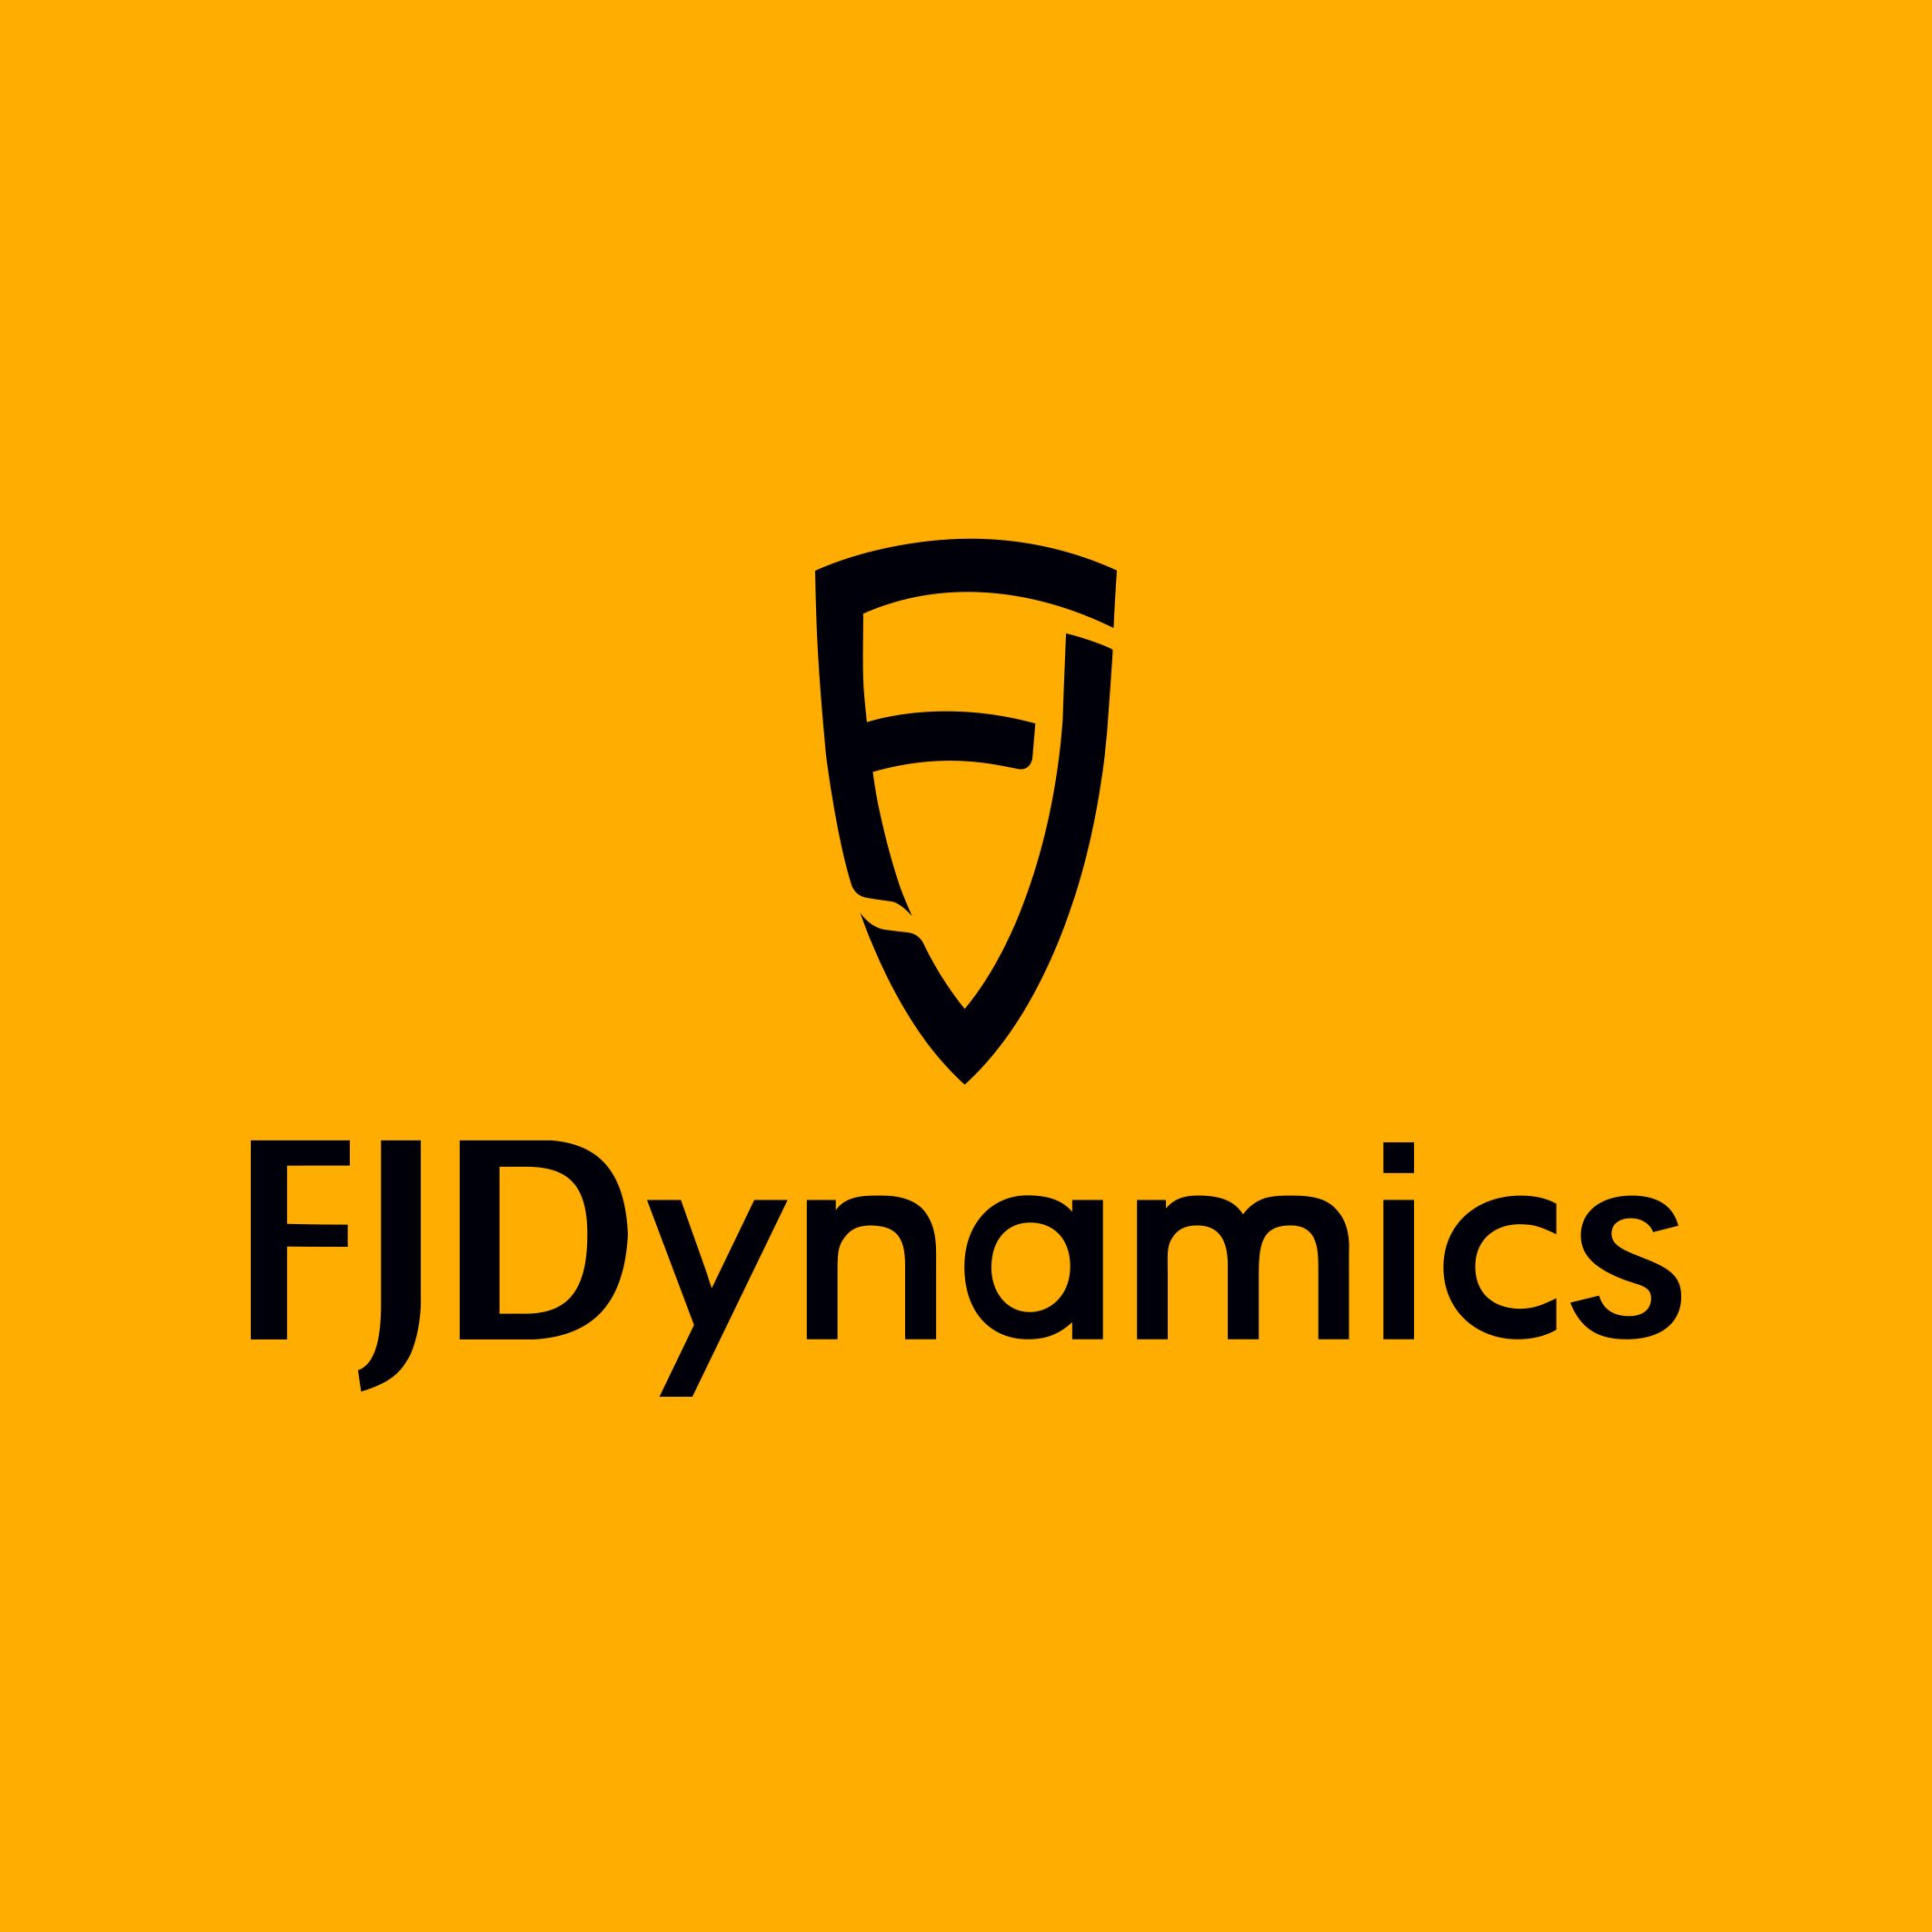 FJ Dynamics International Limited